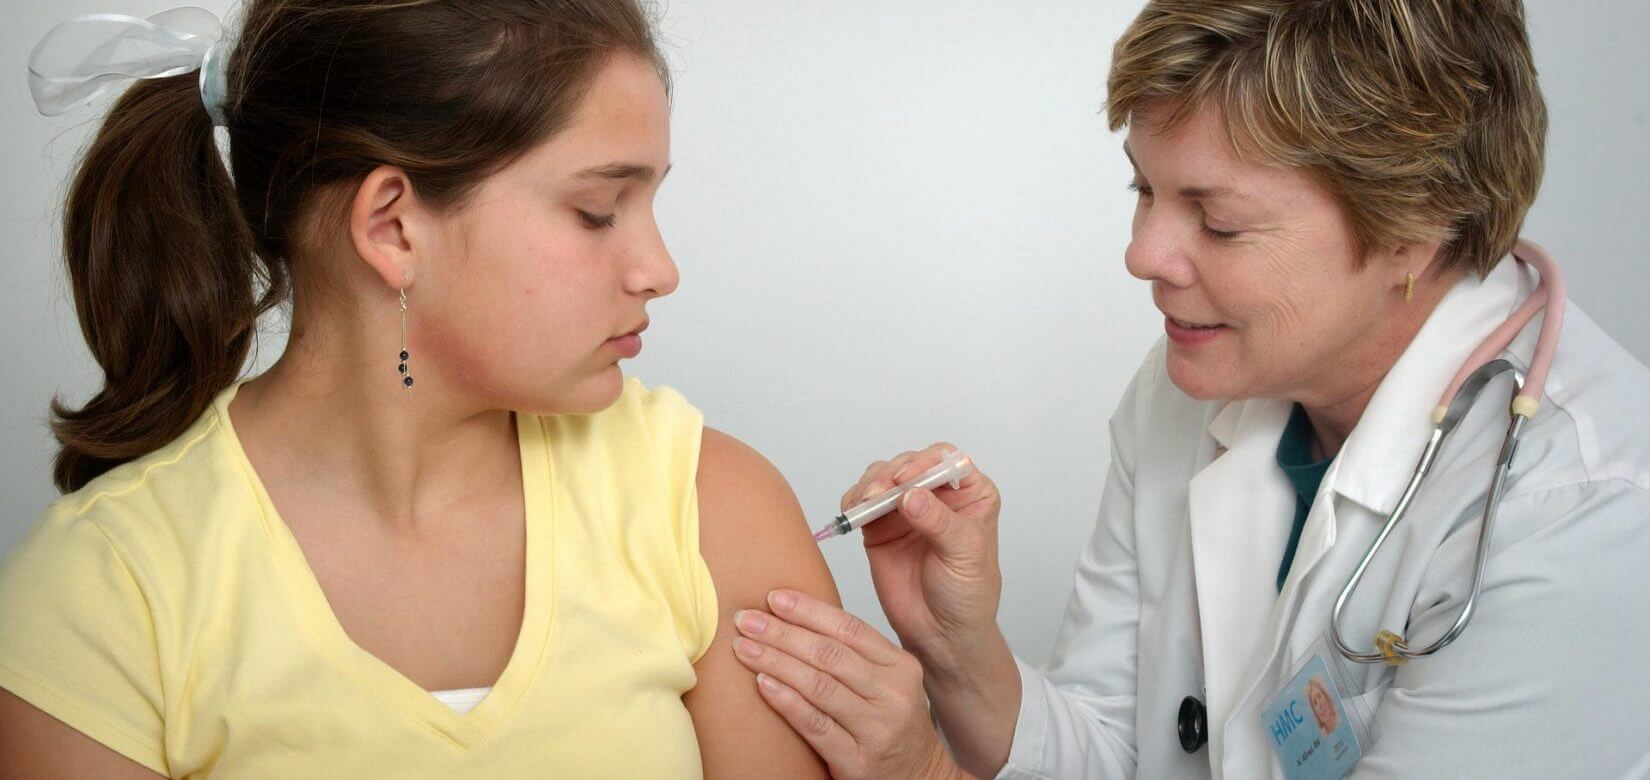 H Pfizer ζητεί από τον ΕΜΑ έγκριση για χρήση του εμβολίου σε παιδιά 12-15 ετών